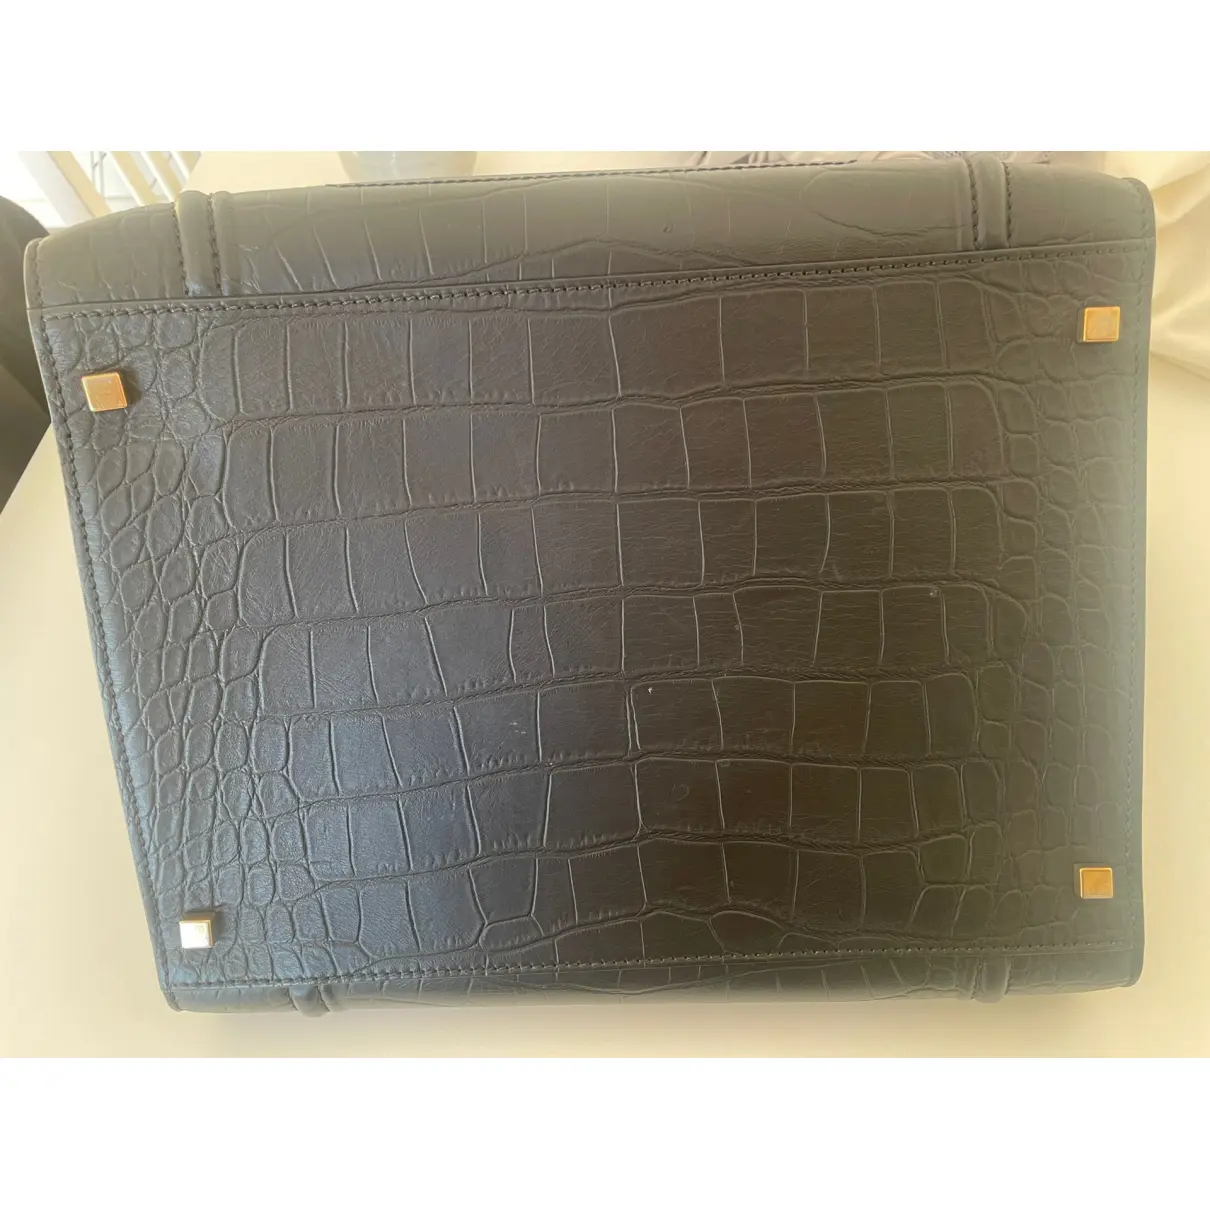 Buy Celine Luggage Phantom leather handbag online